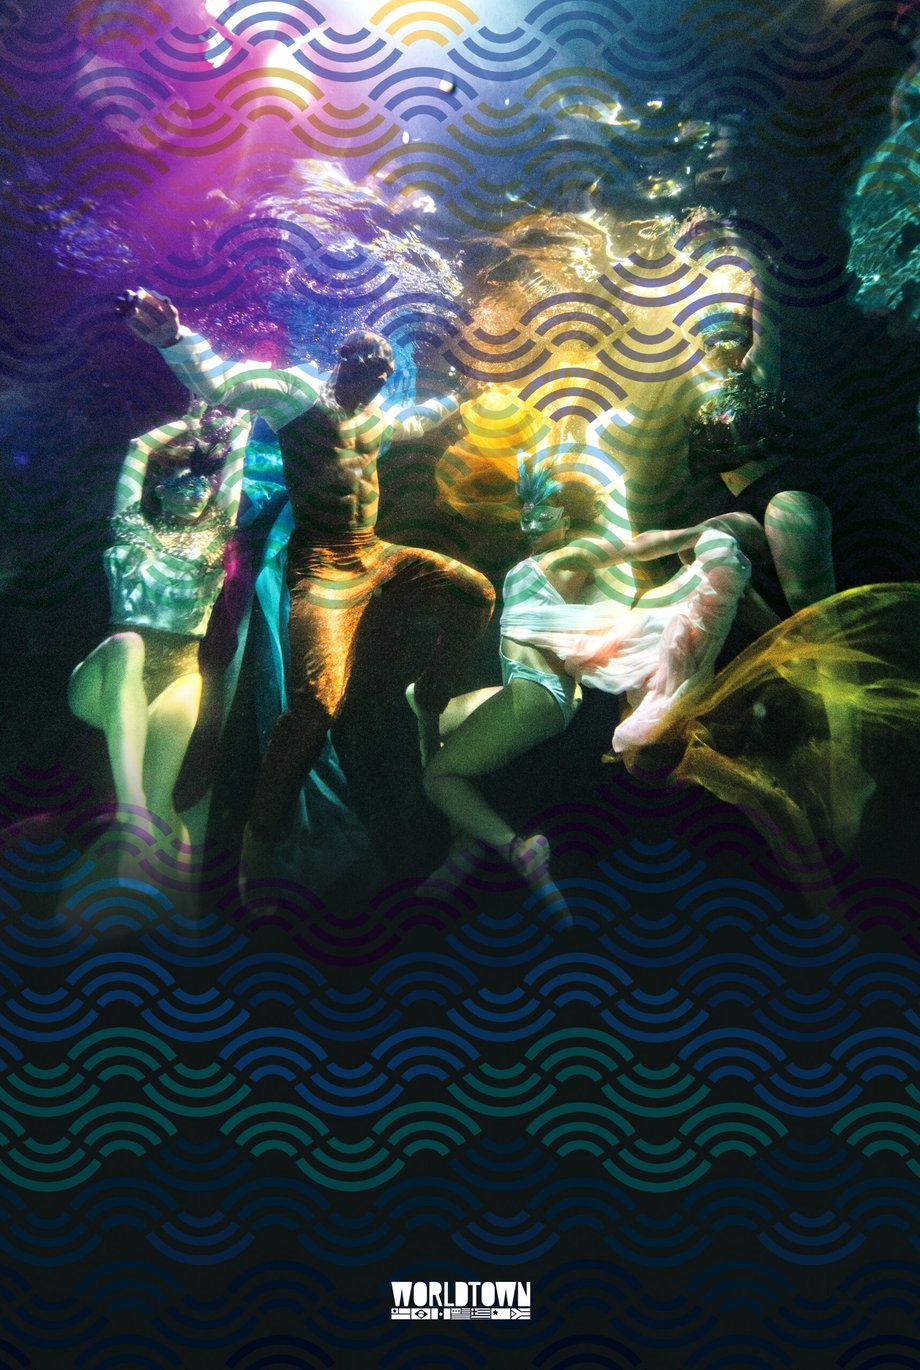 Julia Lehman's underwater portrait of dancers adorns a poster for Worldtown